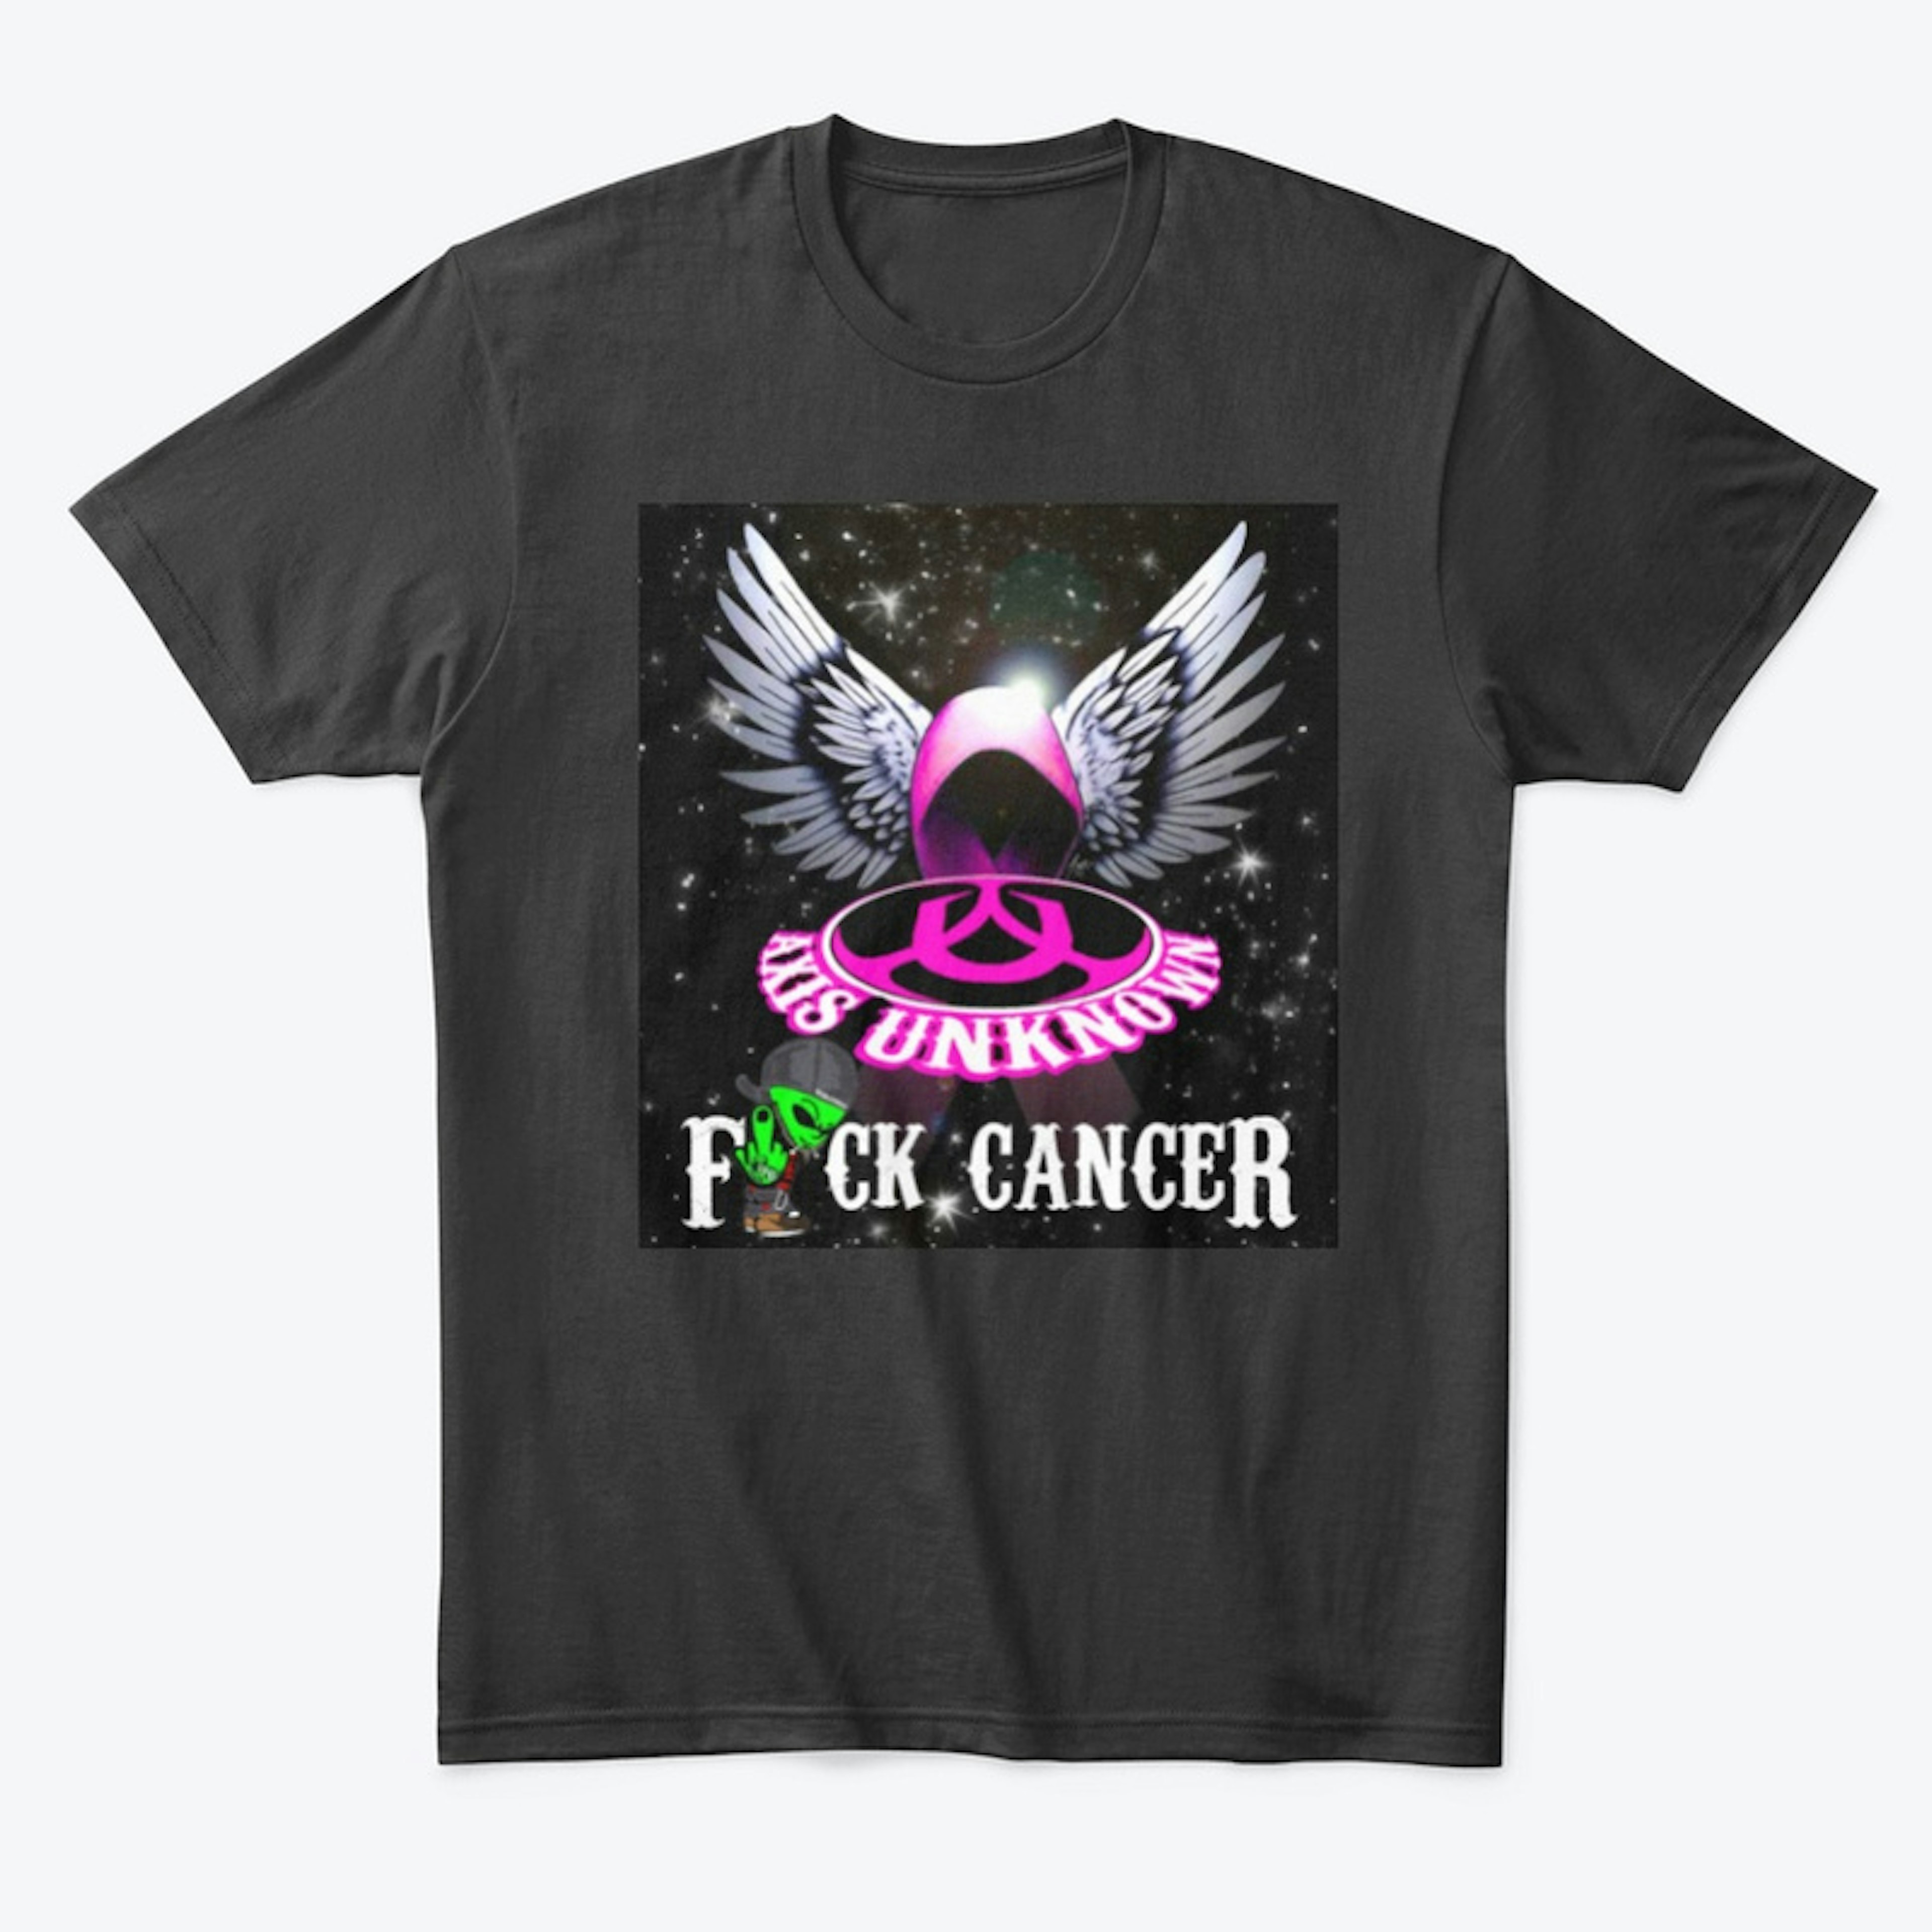 "F*ck Cancer" Special Benefit T-shirt